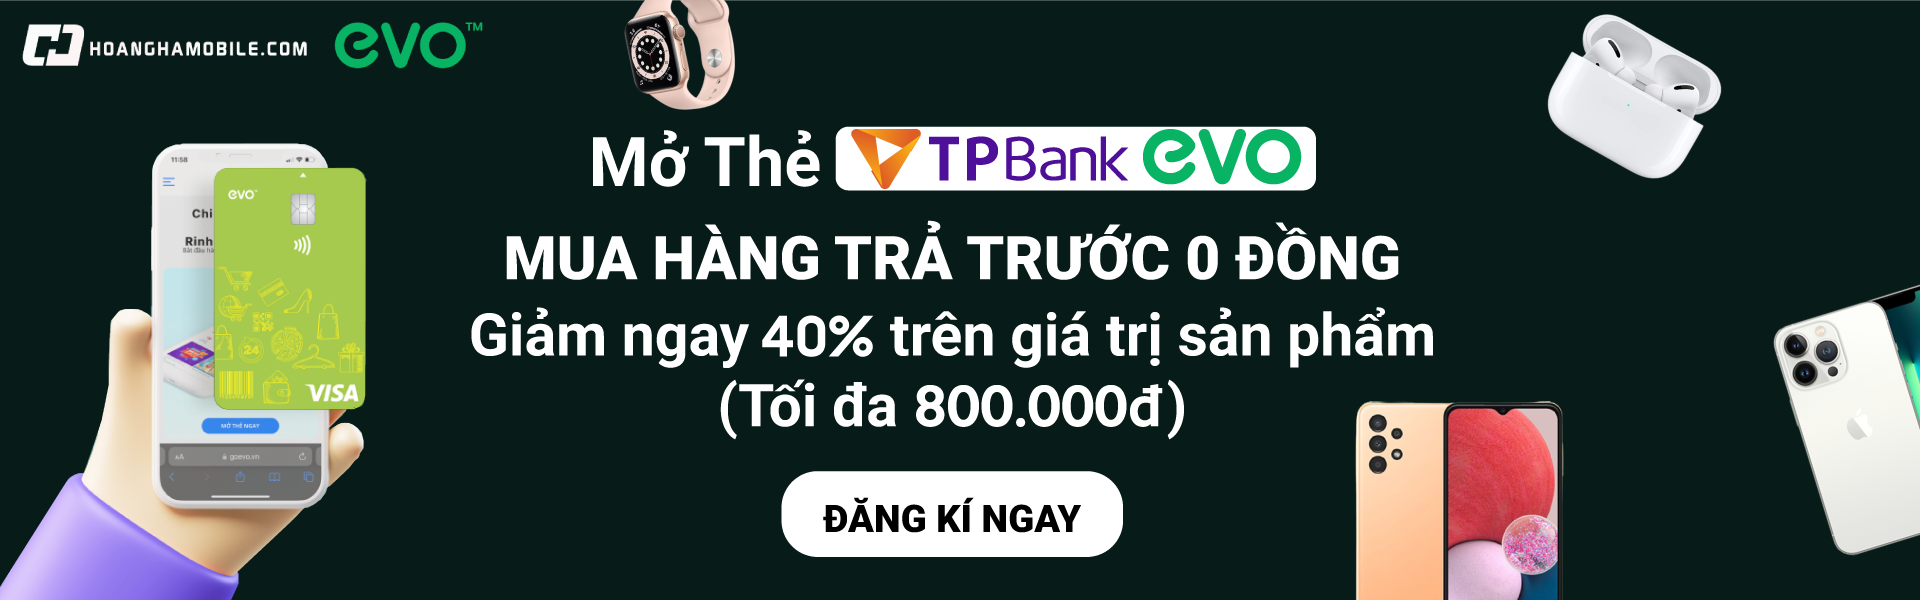 tpbankEVO-1